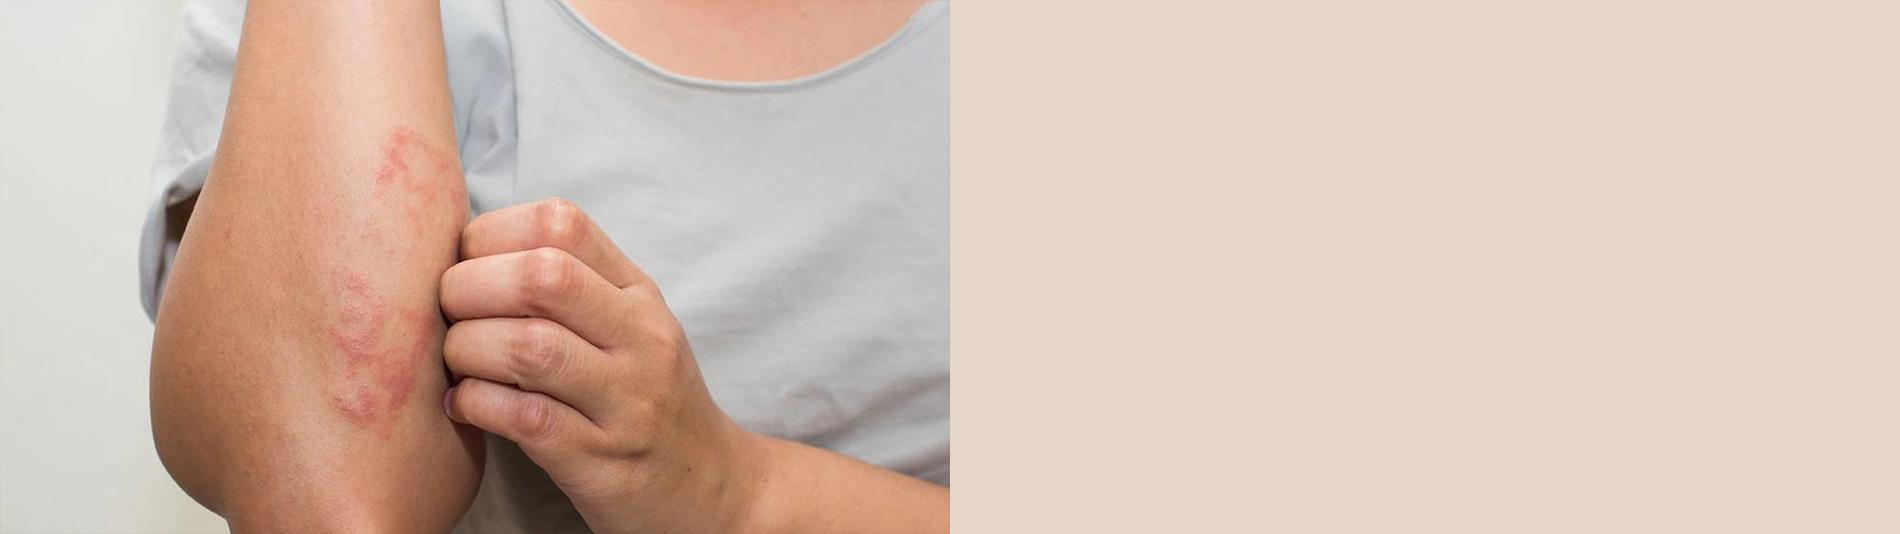 Woman touching arm with Eczema